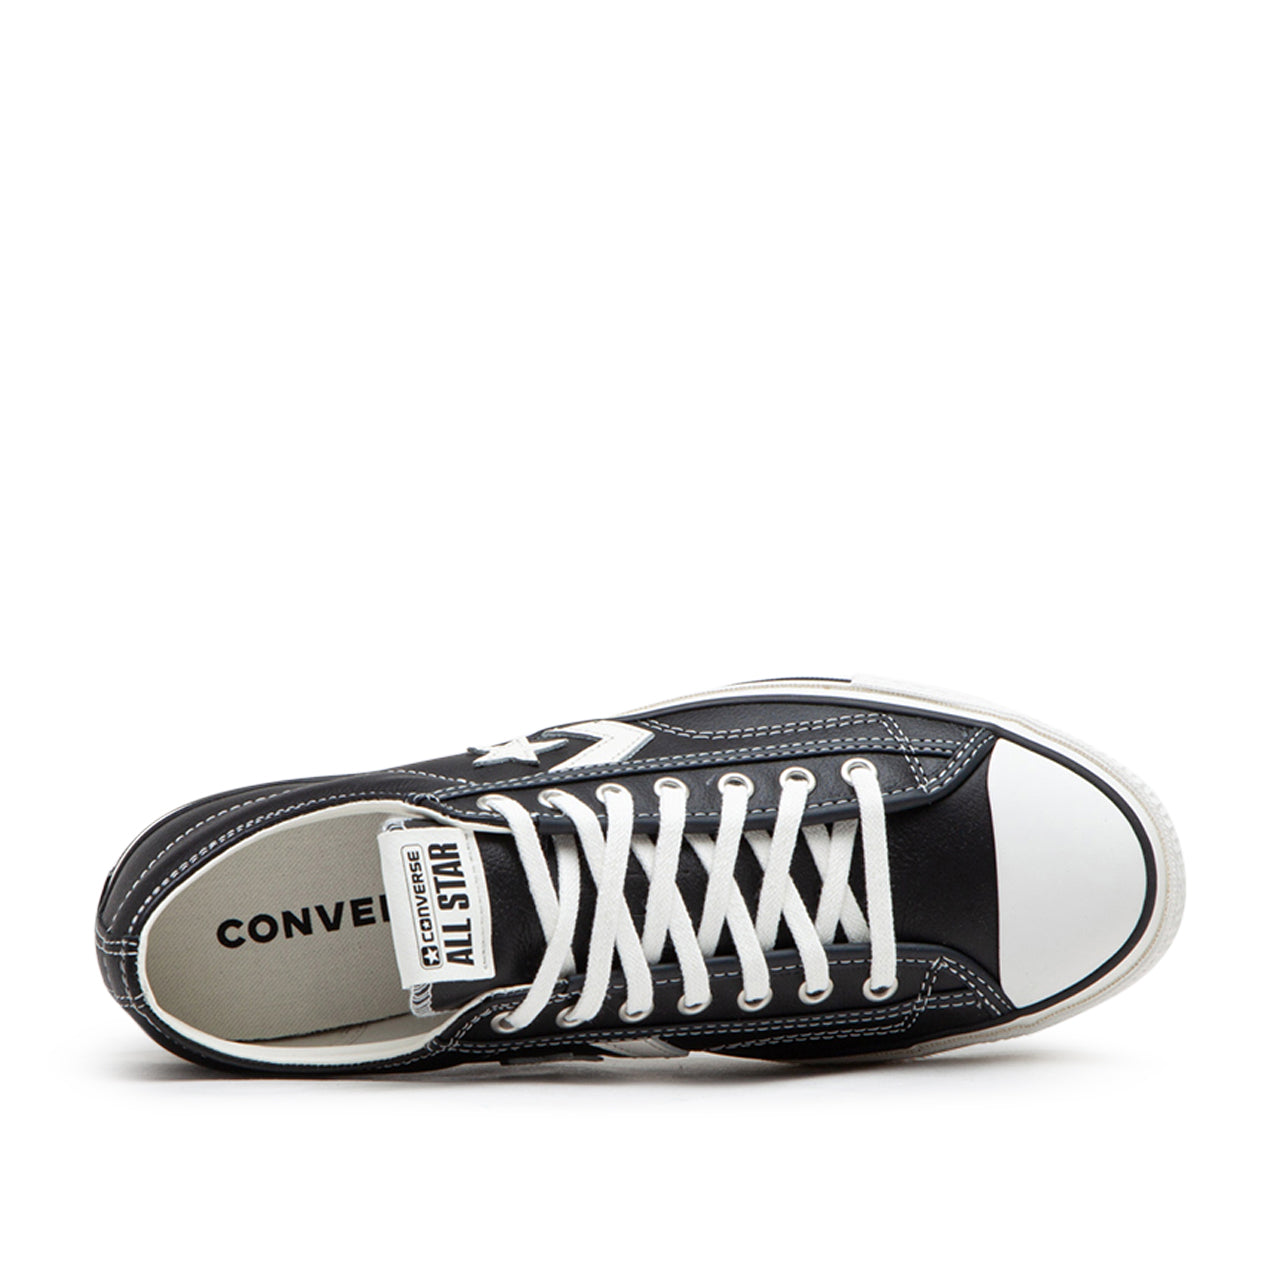 Converse Star Player 76 Fall Leather (Schwarz / Weiß)  - Allike Store